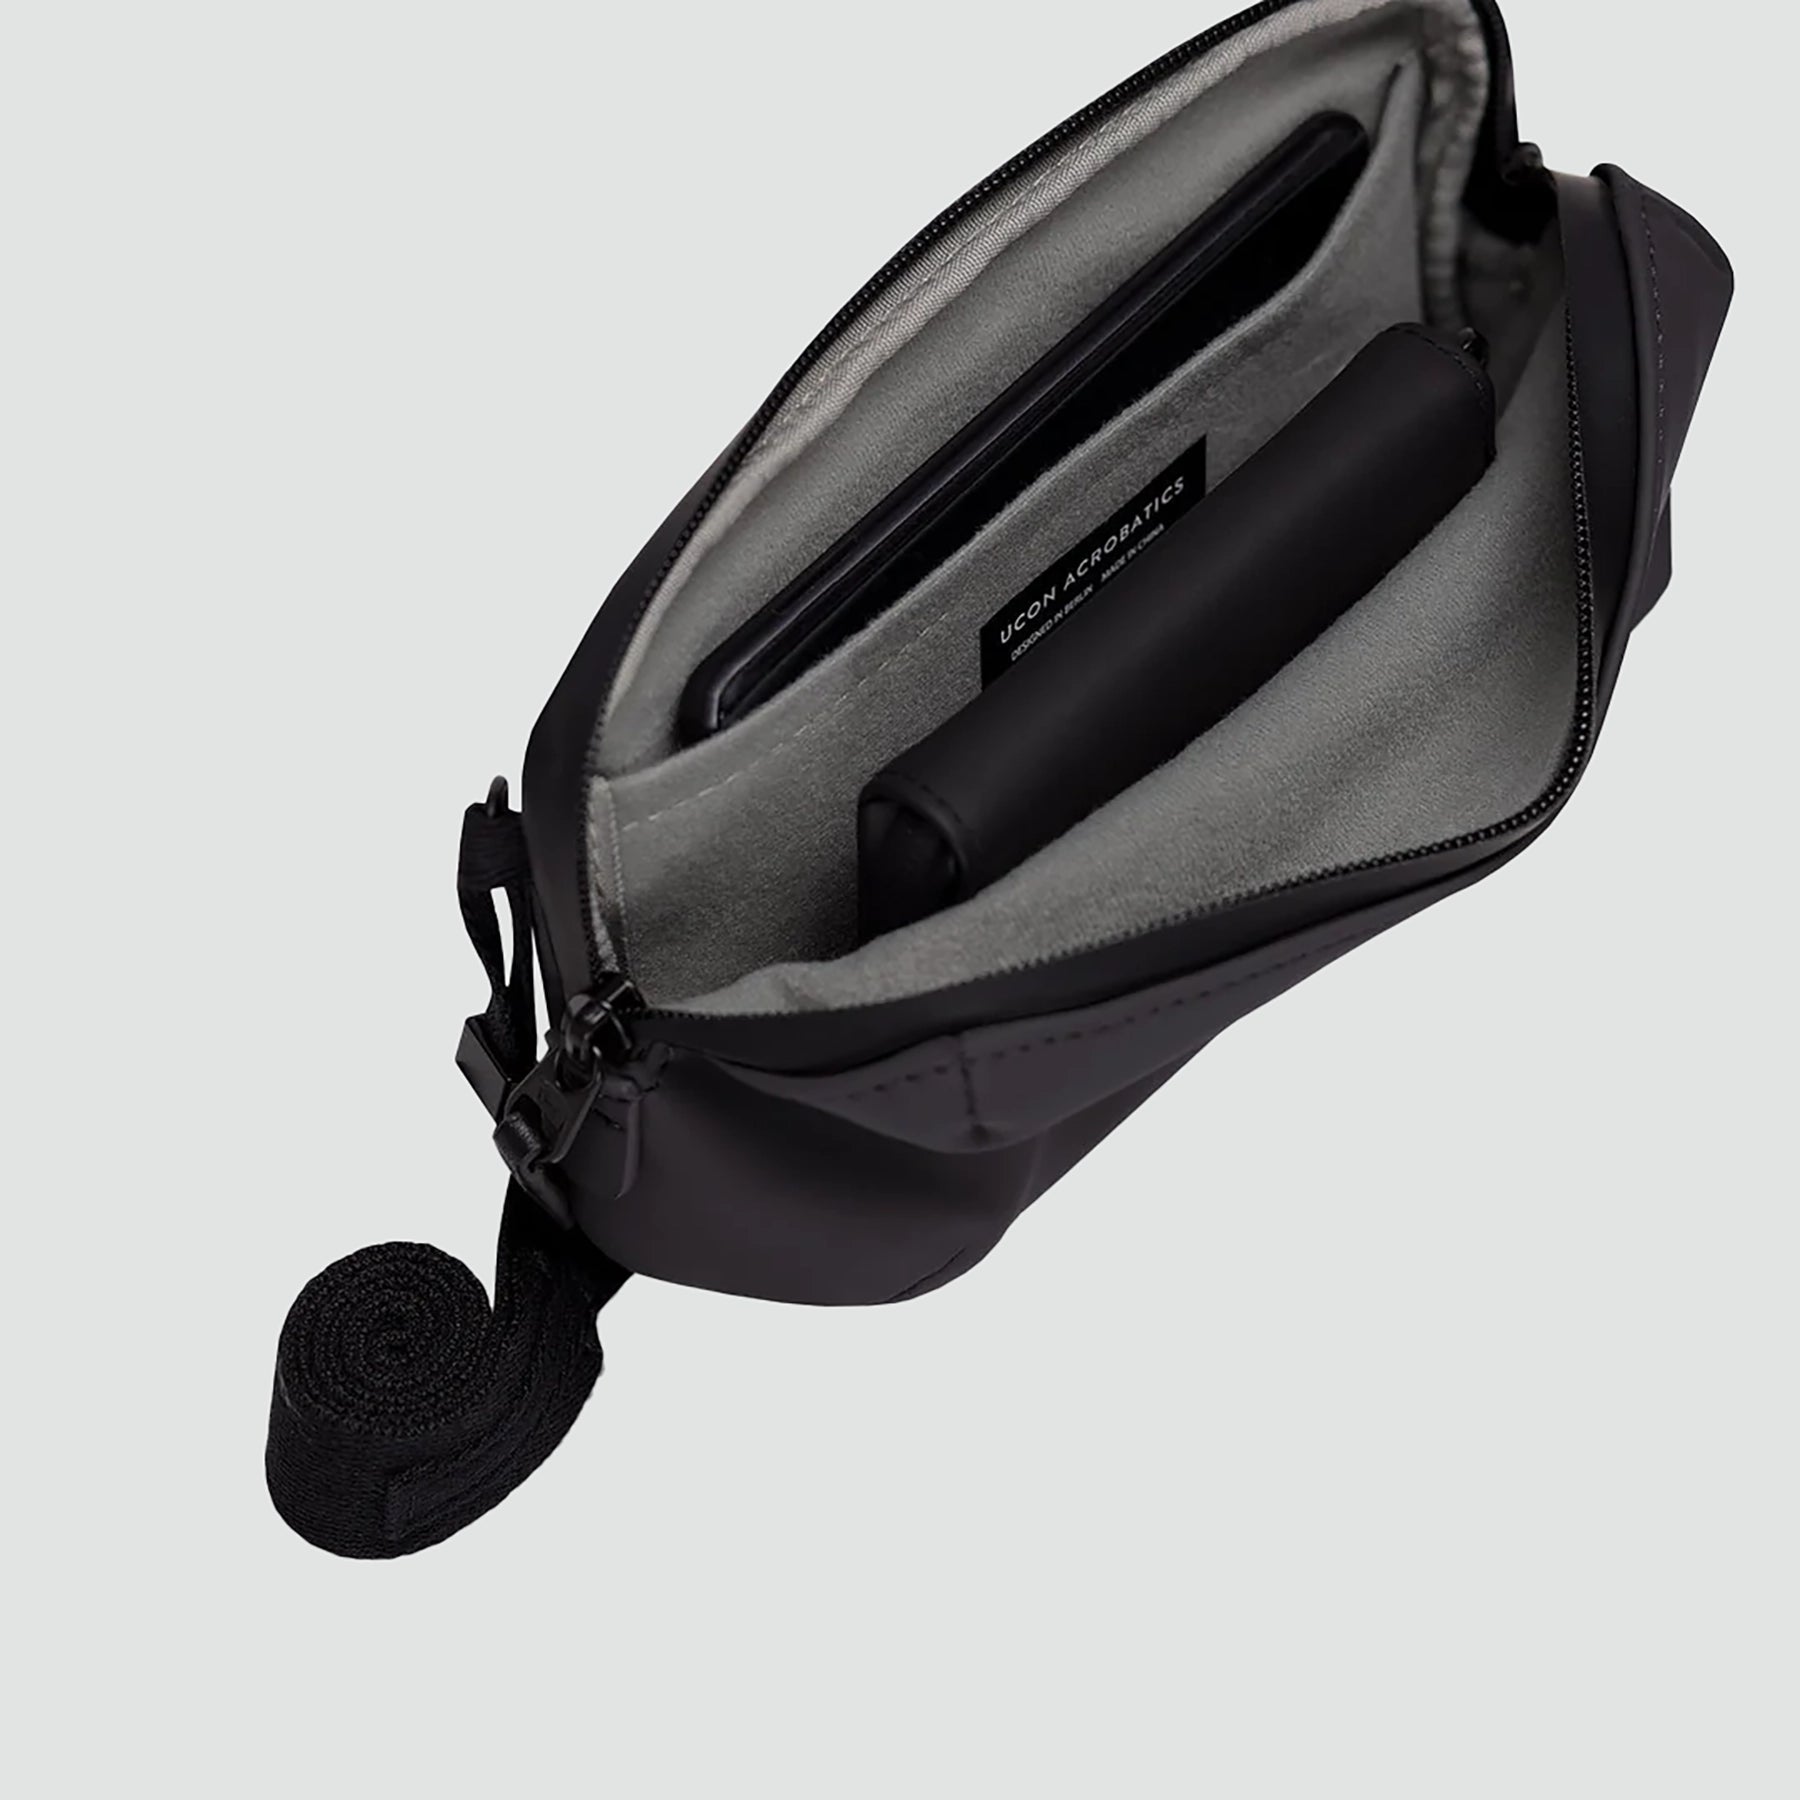 Ando Medium Bag - Black